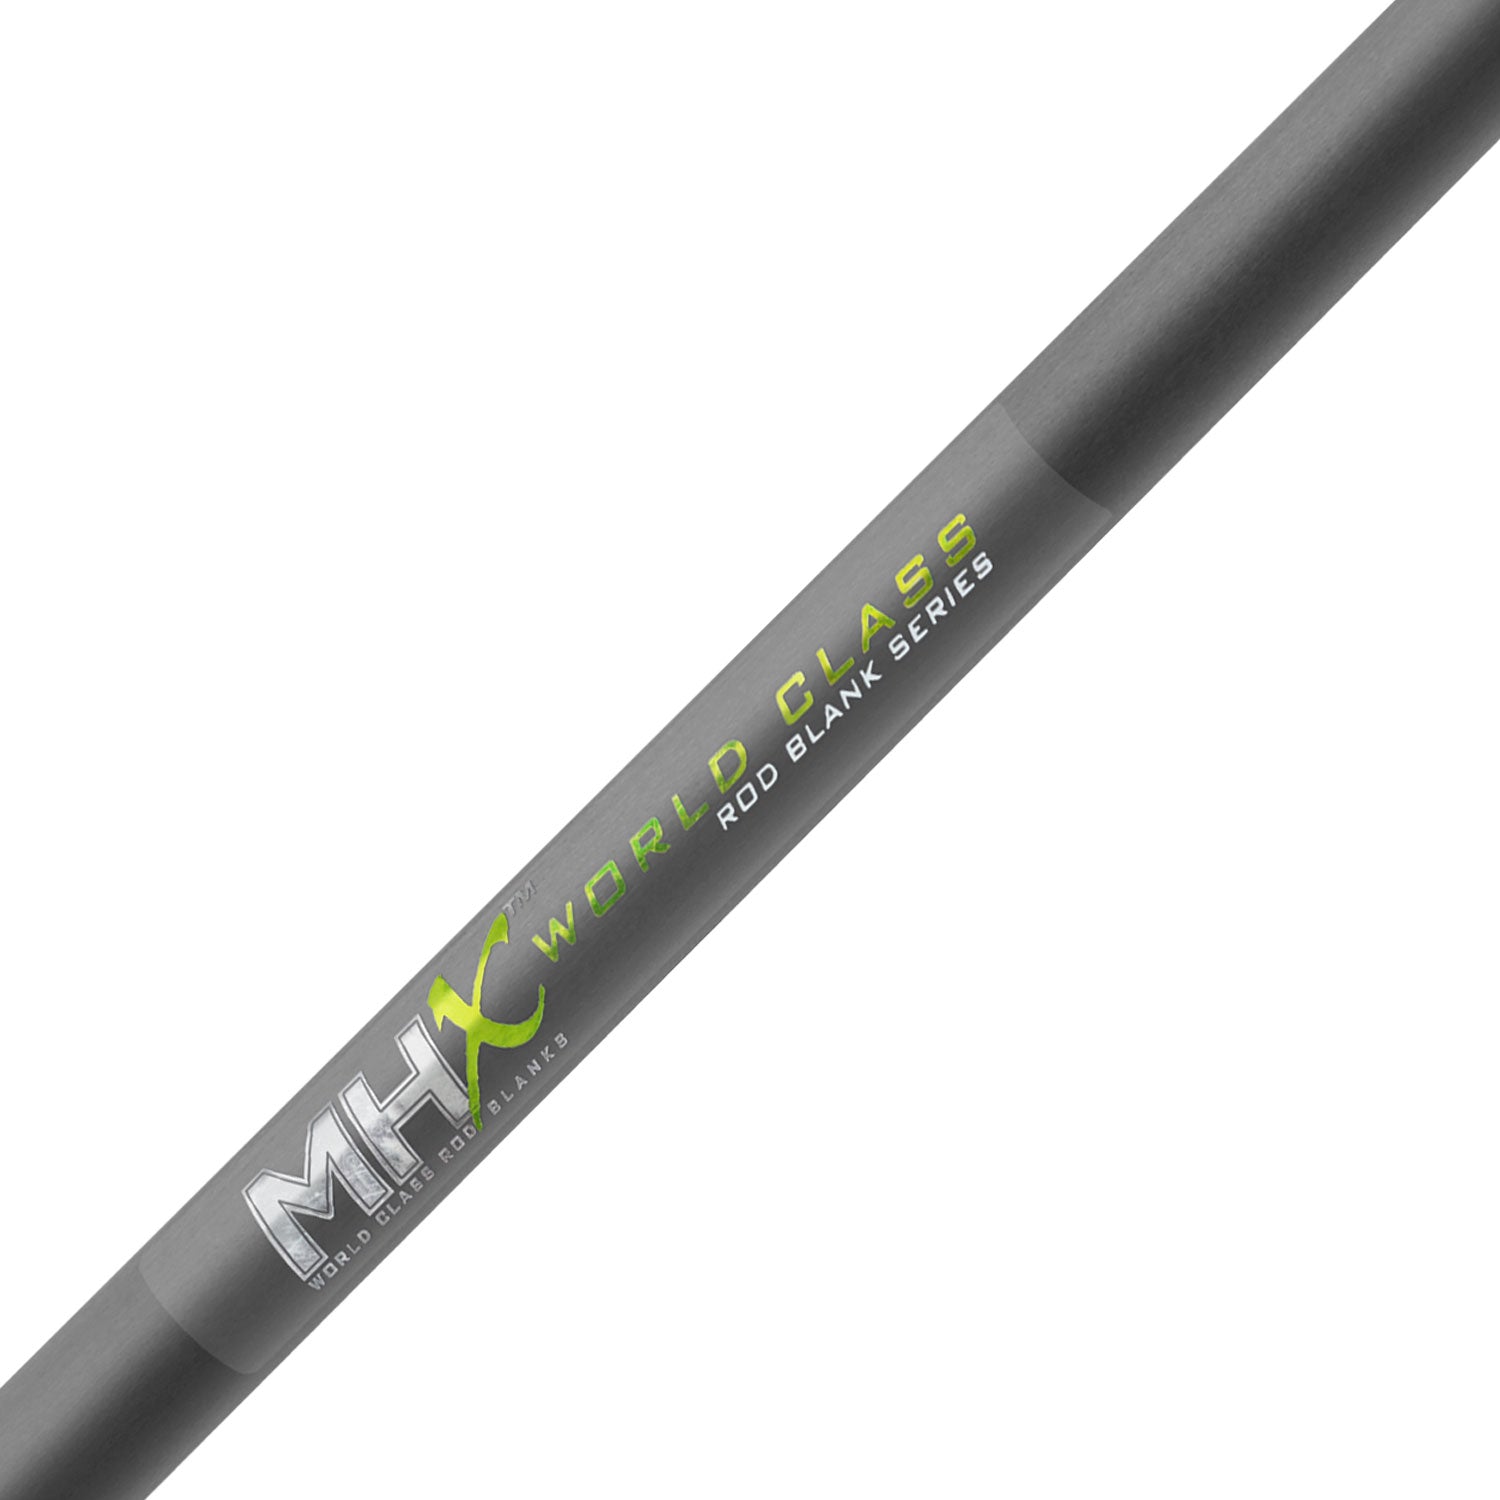 MHX 7'0" Medium Popping Rod Blank - P843-MHX